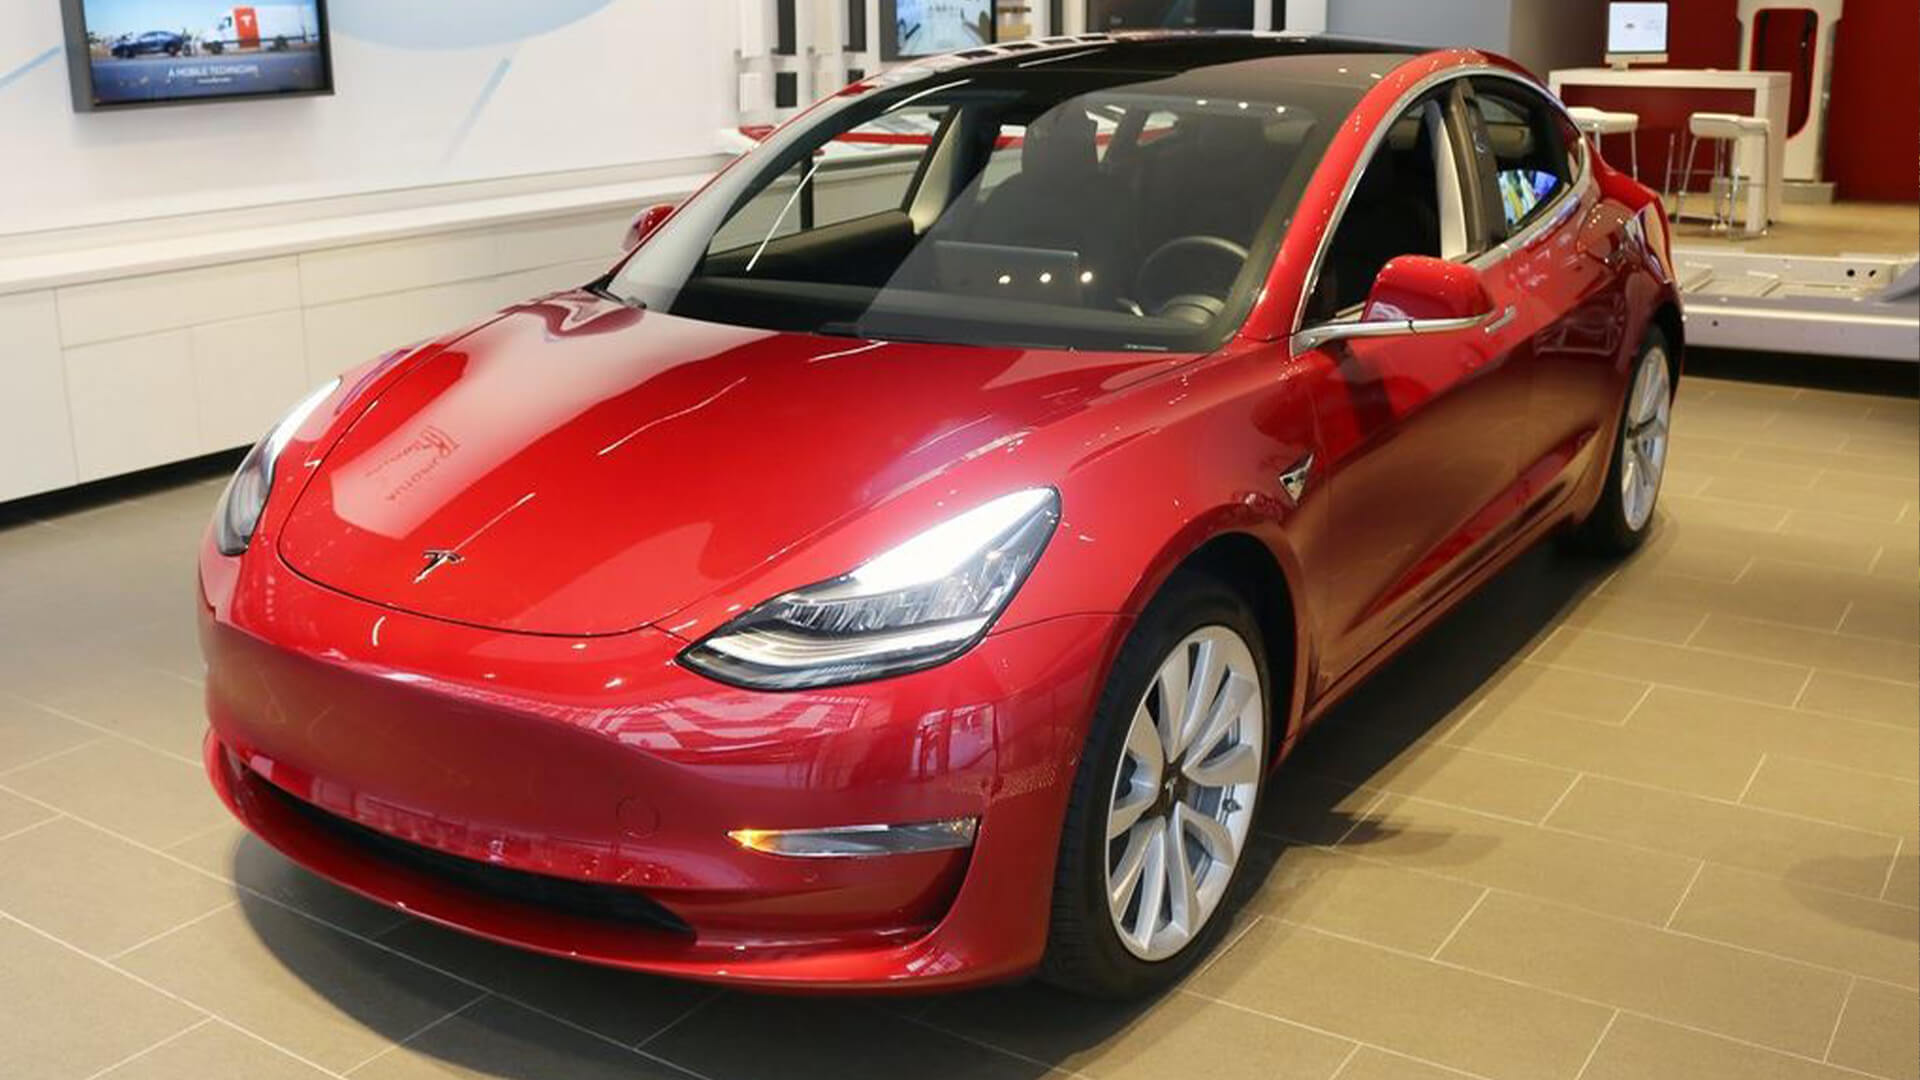 Luxury electric cars: Jaguar I-PACE or a Tesla Model 3?